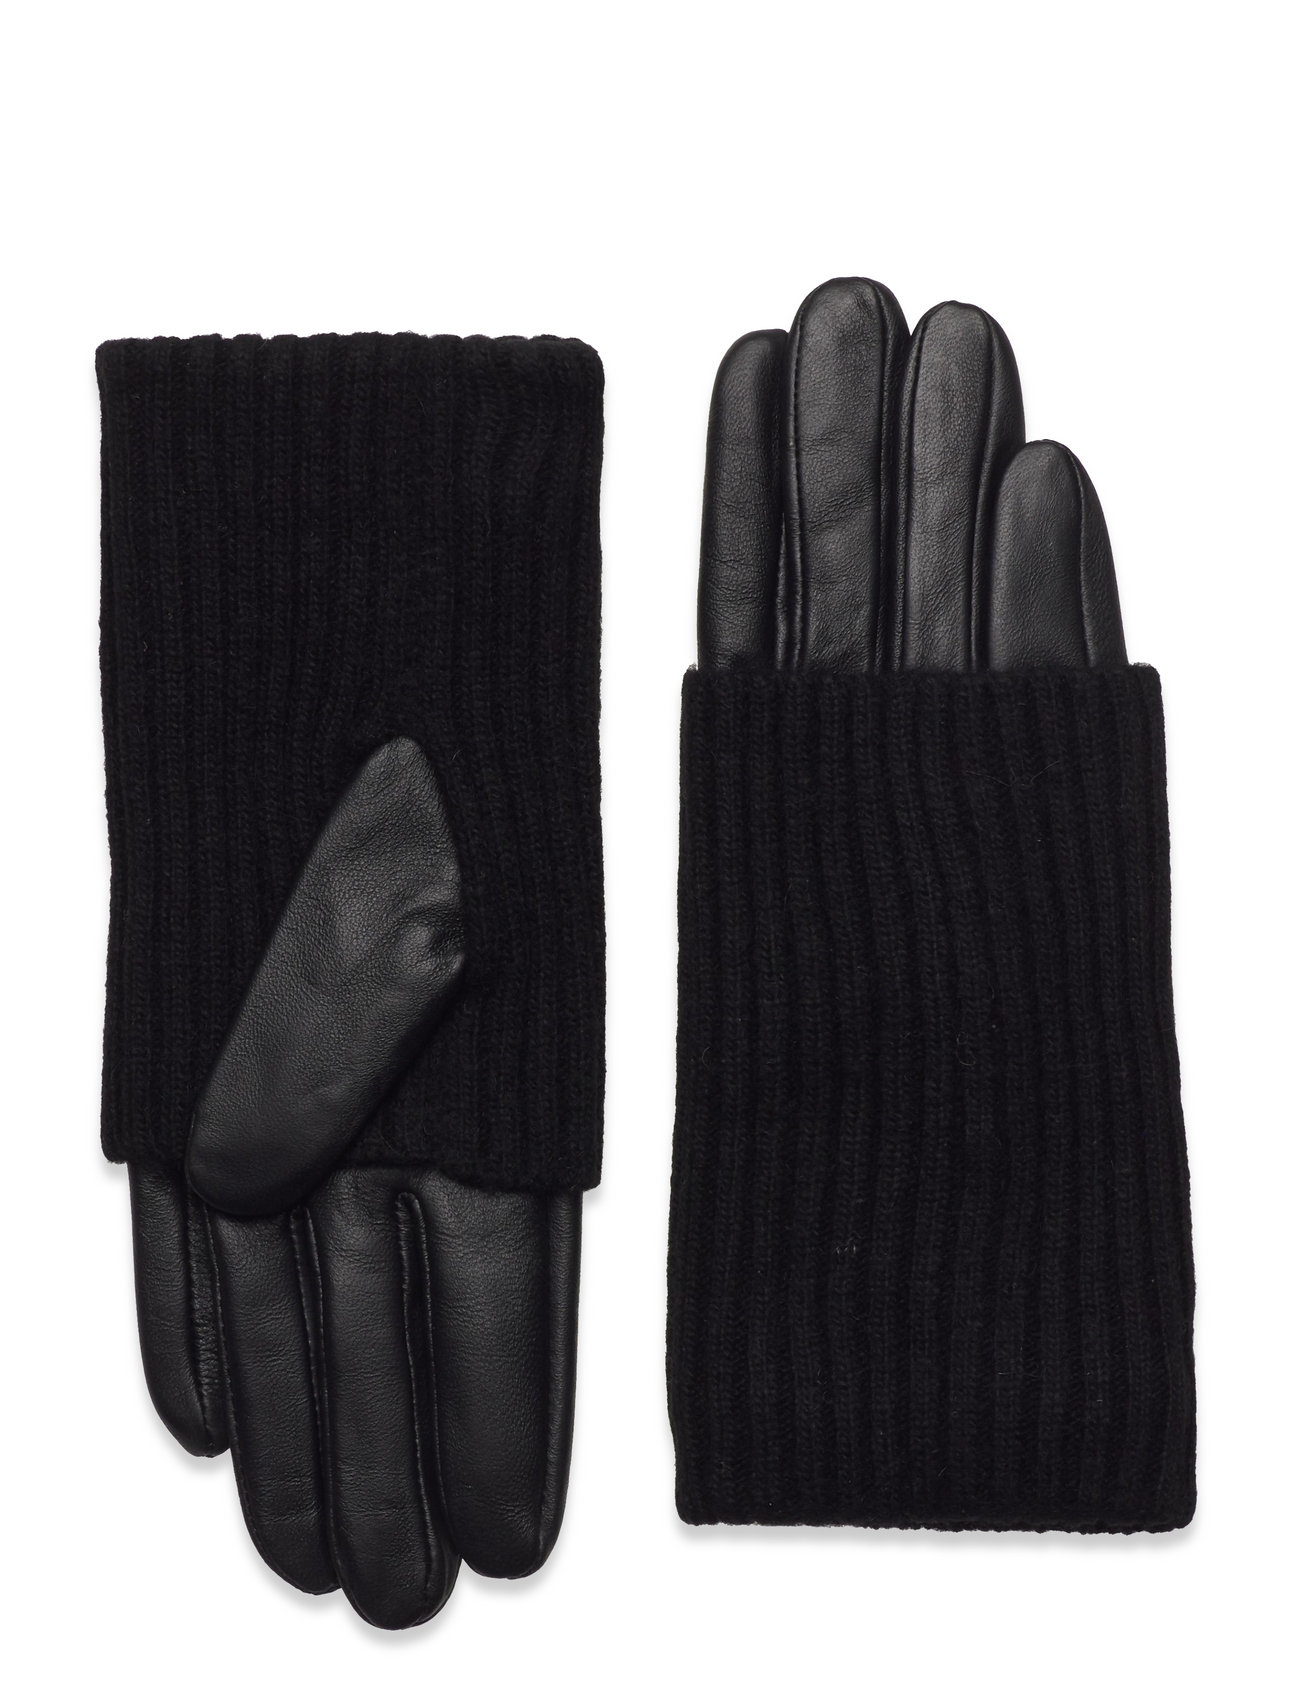 DAY Day Leather Knit Glove - Handsker Vanter -